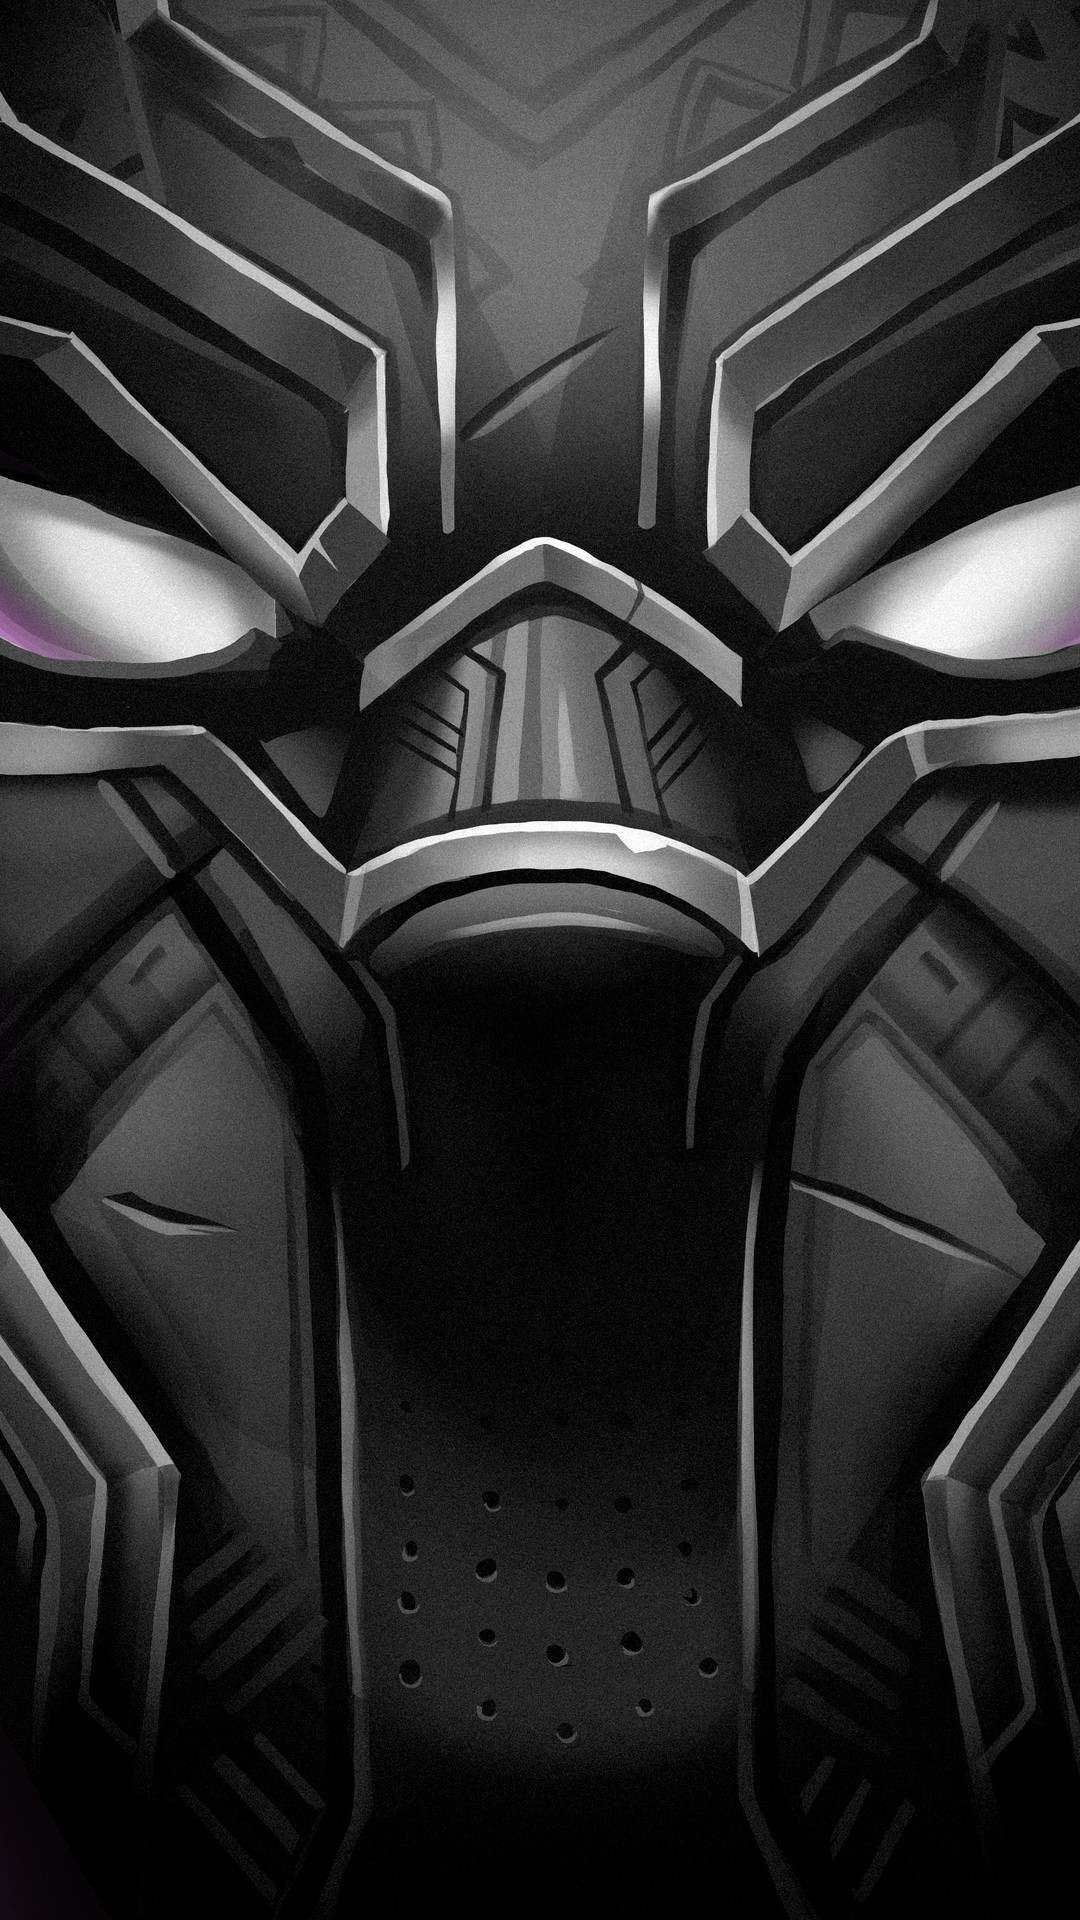 Black Panther Face iPhone Wallpaper